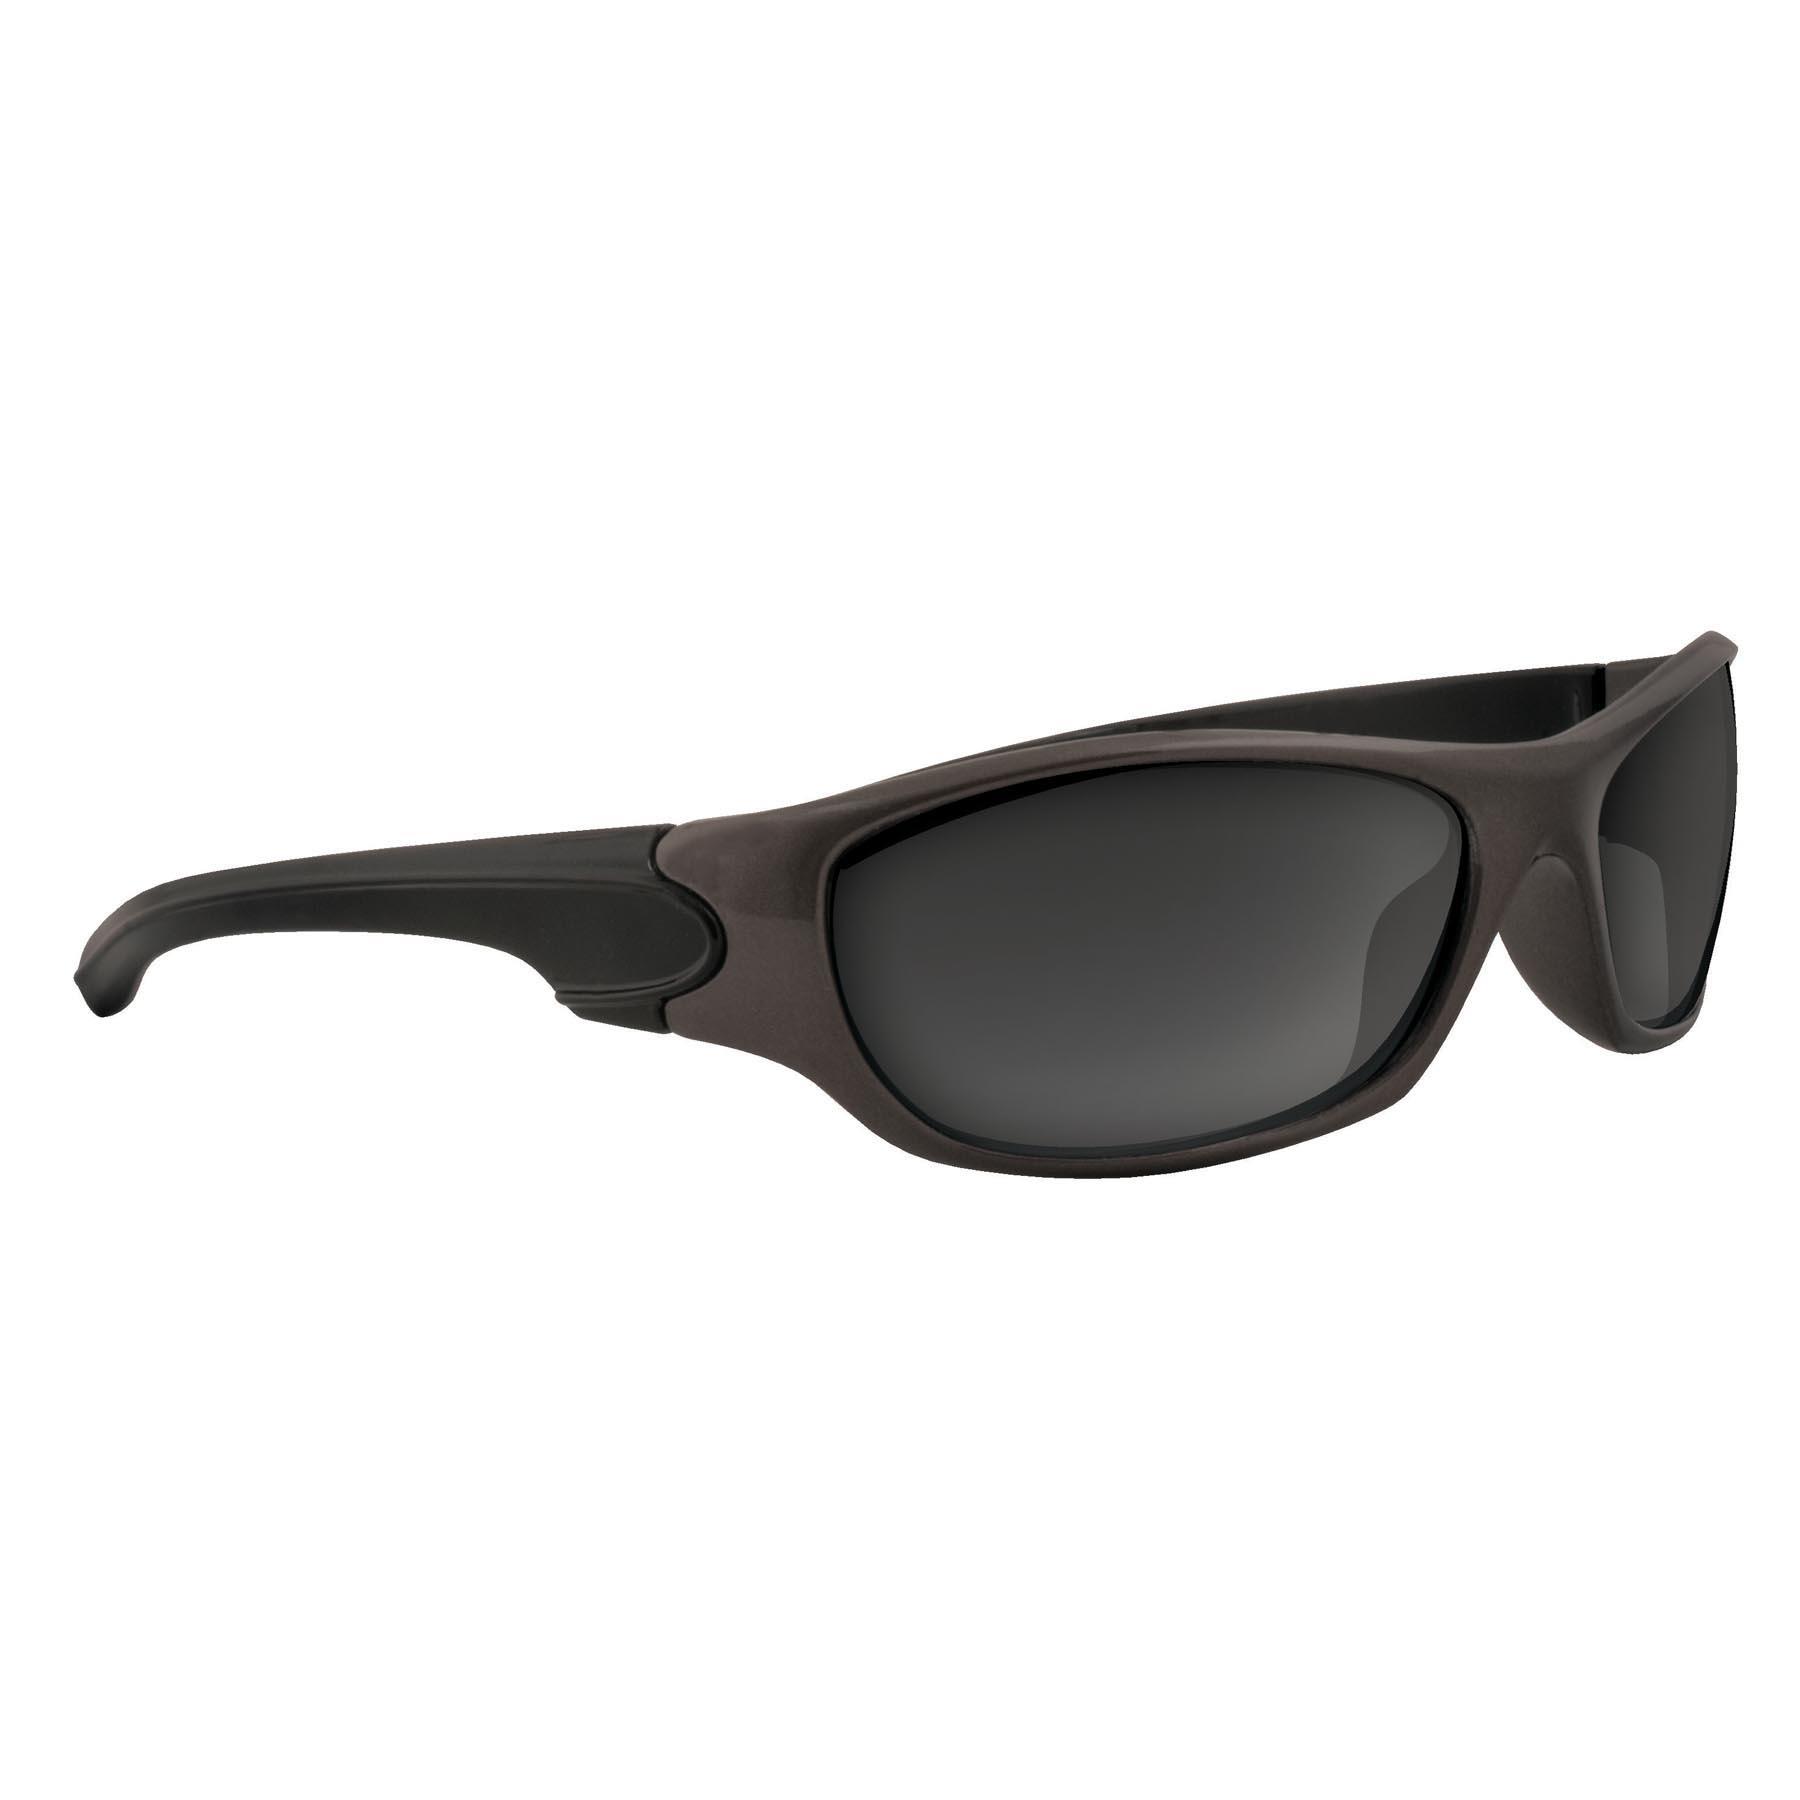 Children's Sunglasses 100% UV protection for Summer Holiday - Boys Grey / Black